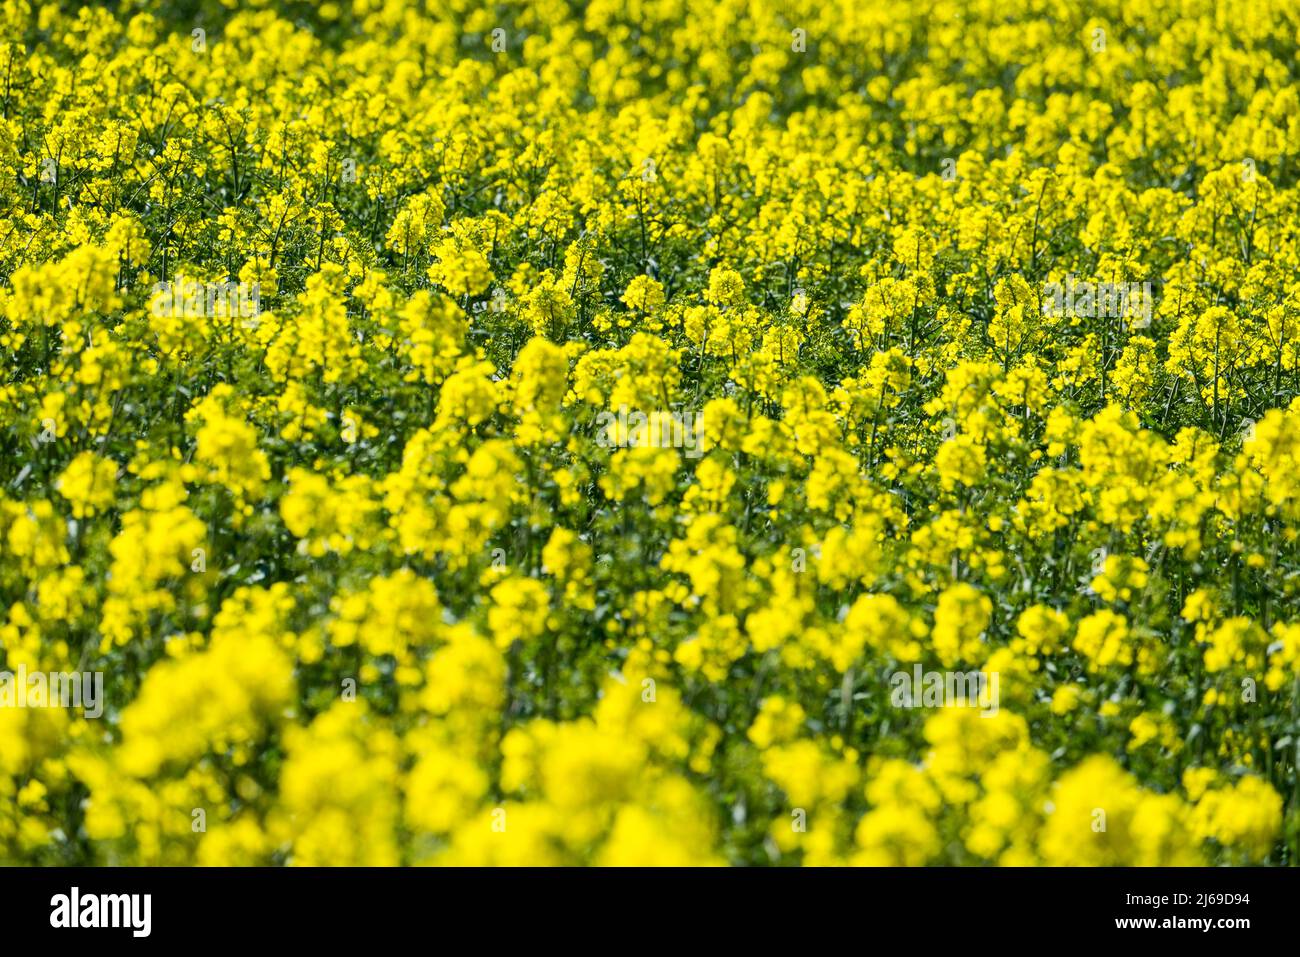 Paysage avec champs de colza près de Gewissenruh, Wesertal, Weserbergland, Hesse, Allemagne Banque D'Images